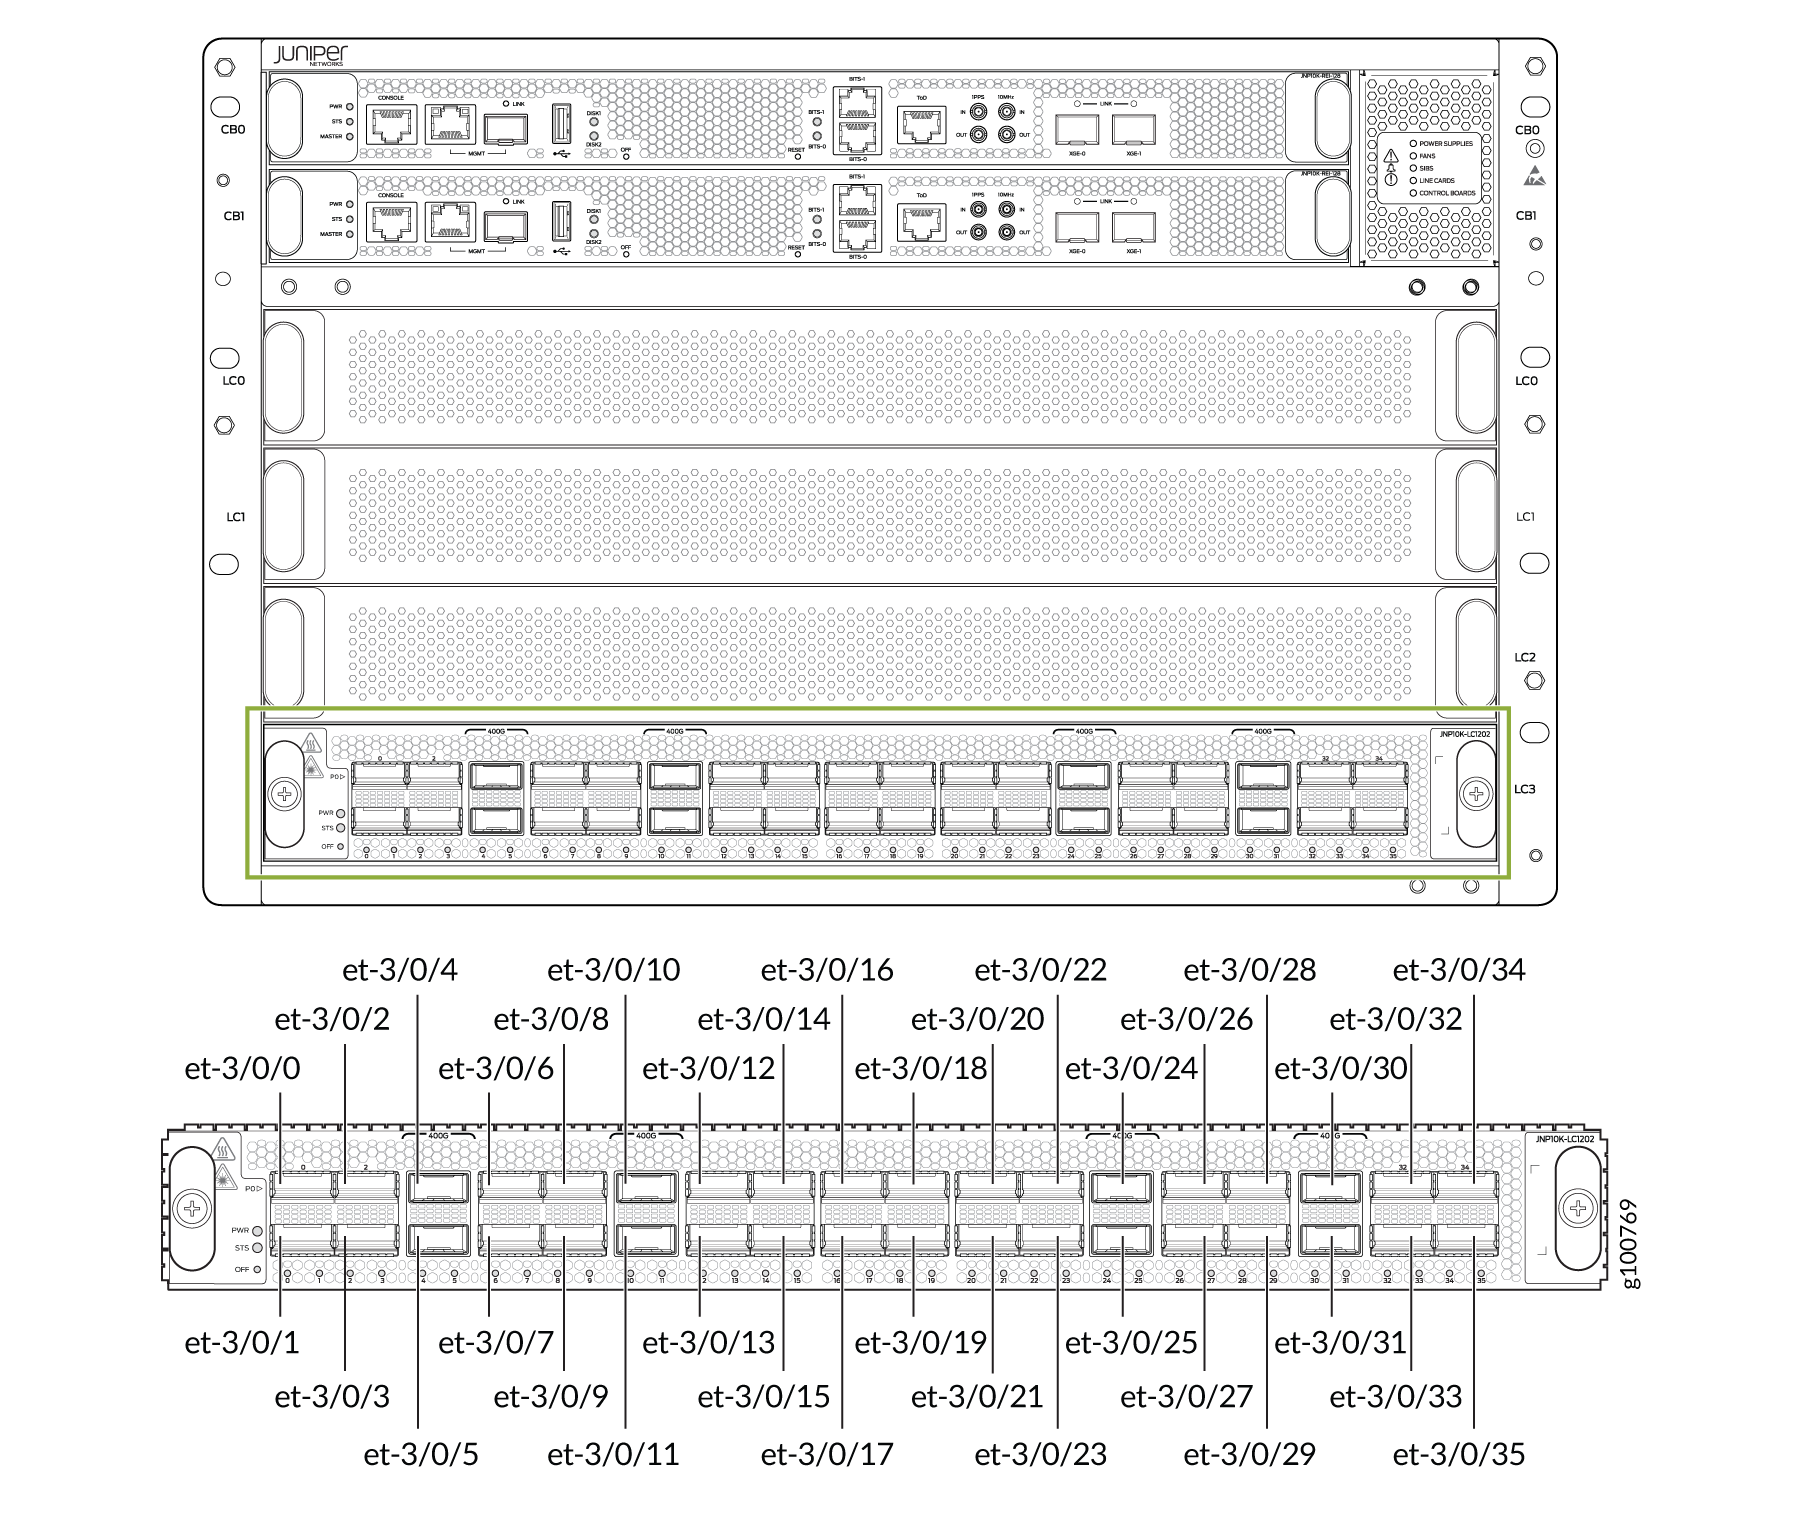 Port numbering for PTX10K-LC1202-36MR (PTX10004)